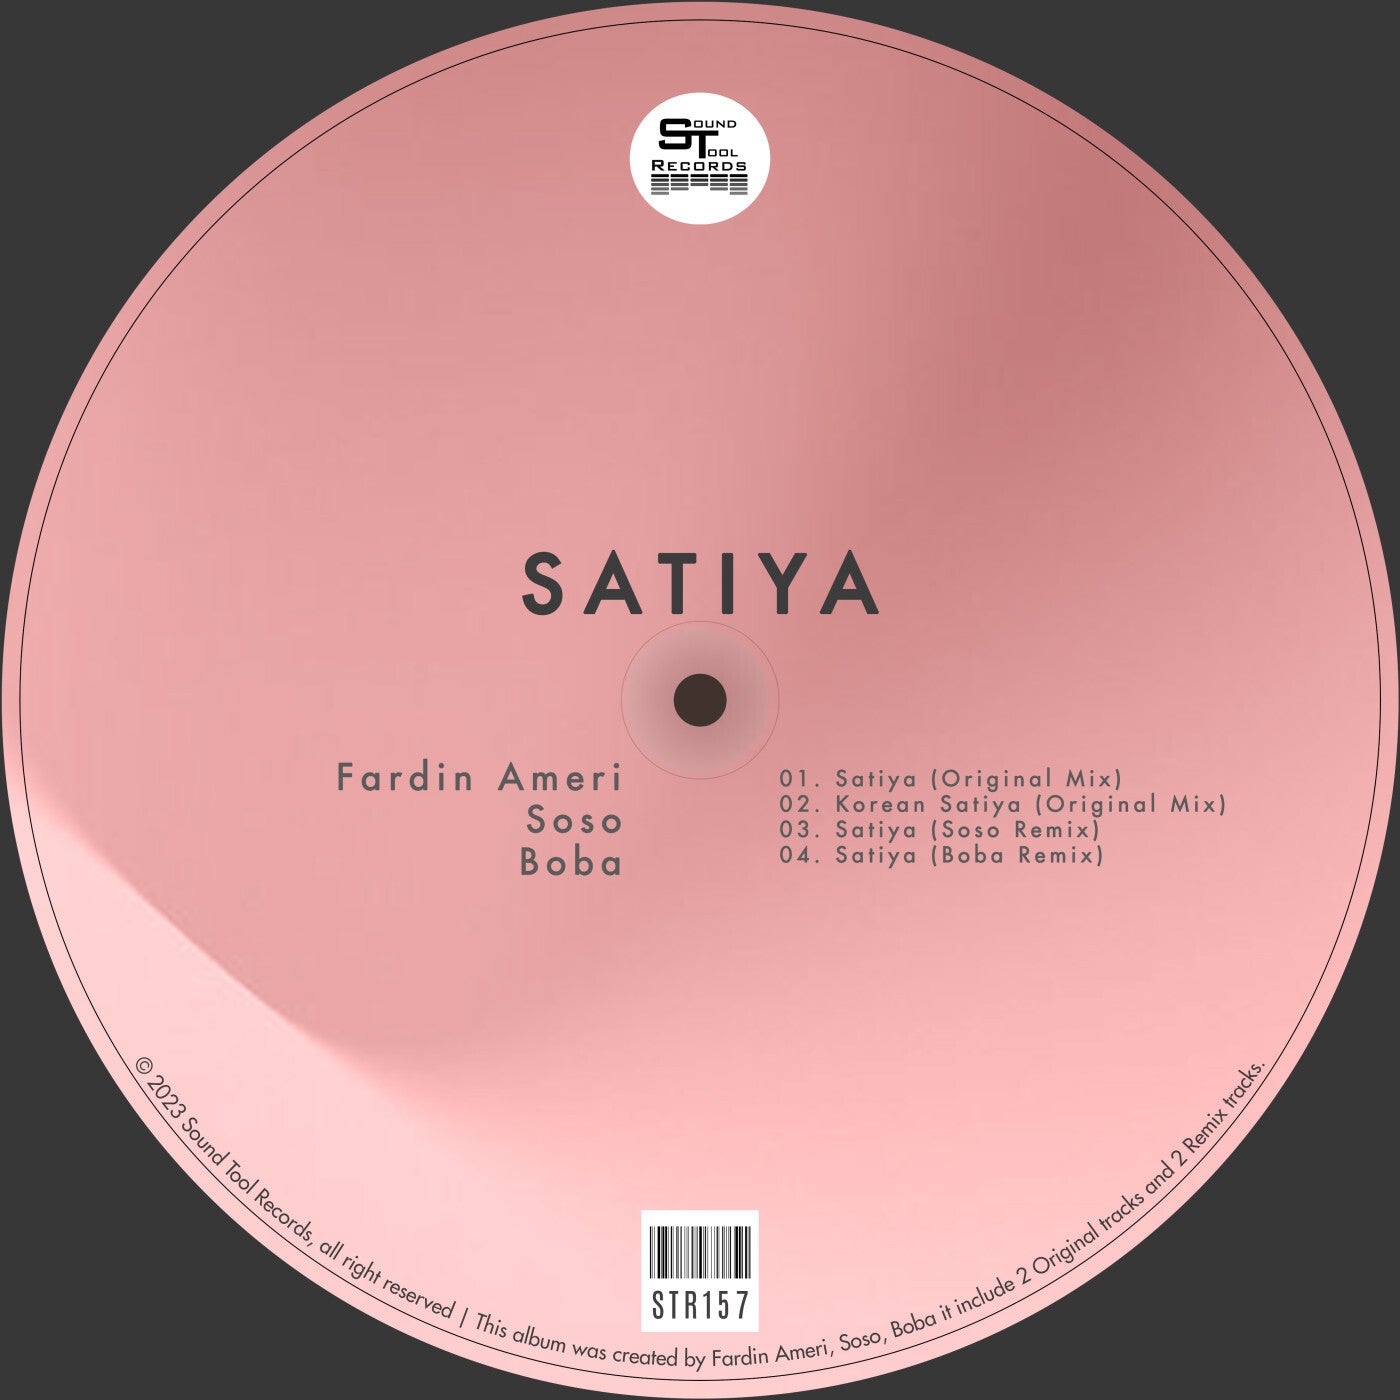 Satiya by Fardin Ameri on Beatsource